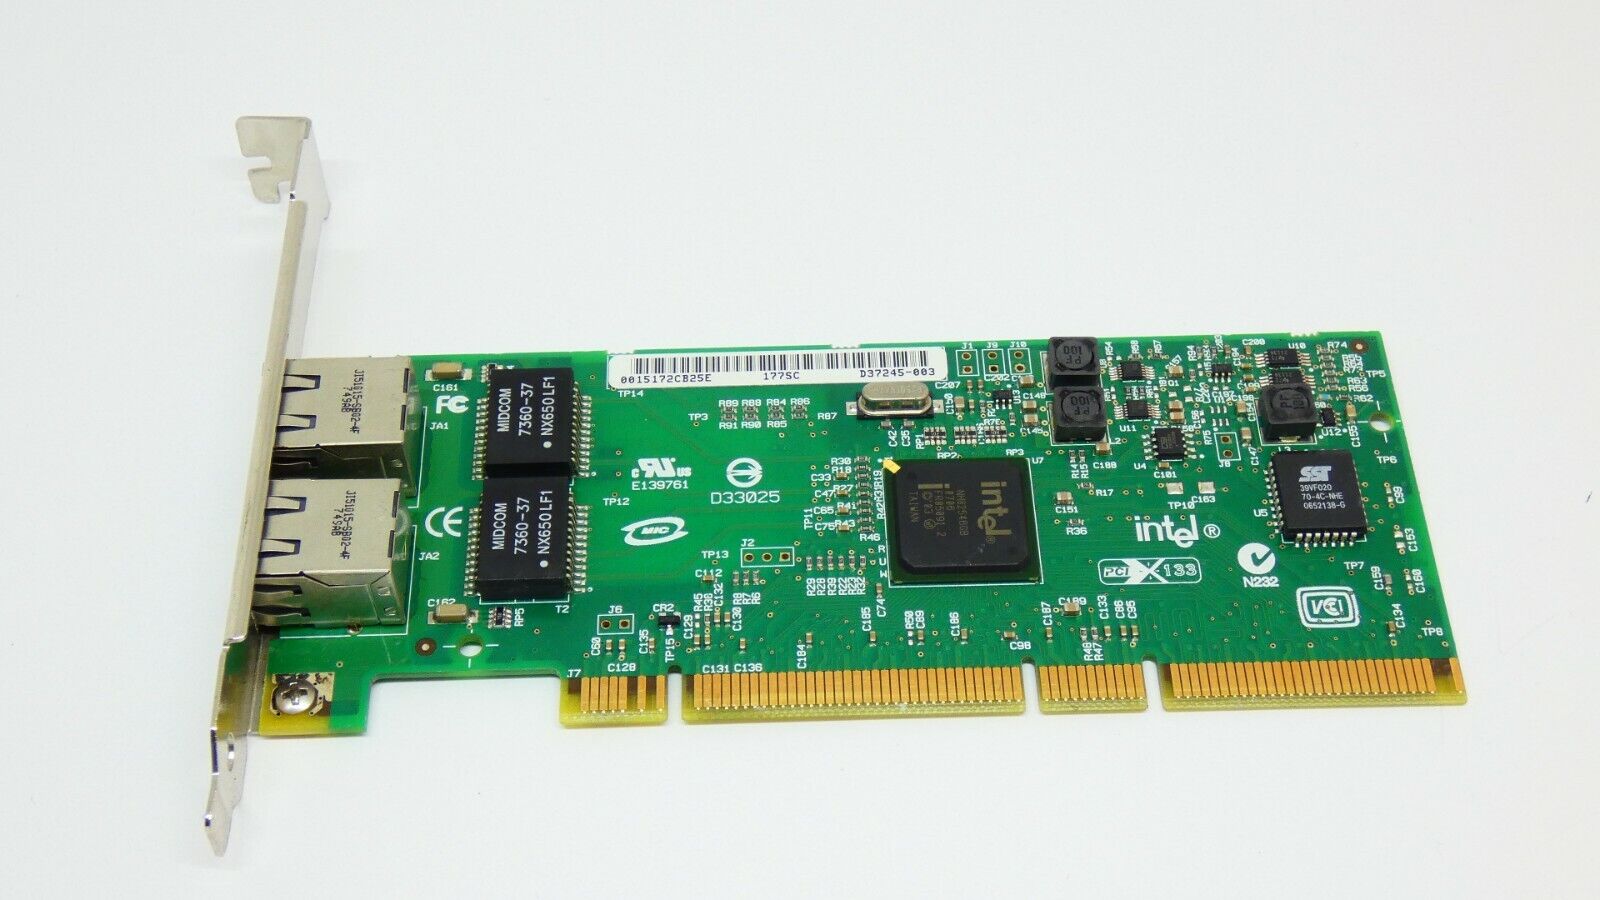 Intel SUN Dual Port Gigabit Network Ethernet PN 371-0911-02 - PCI-X Card 